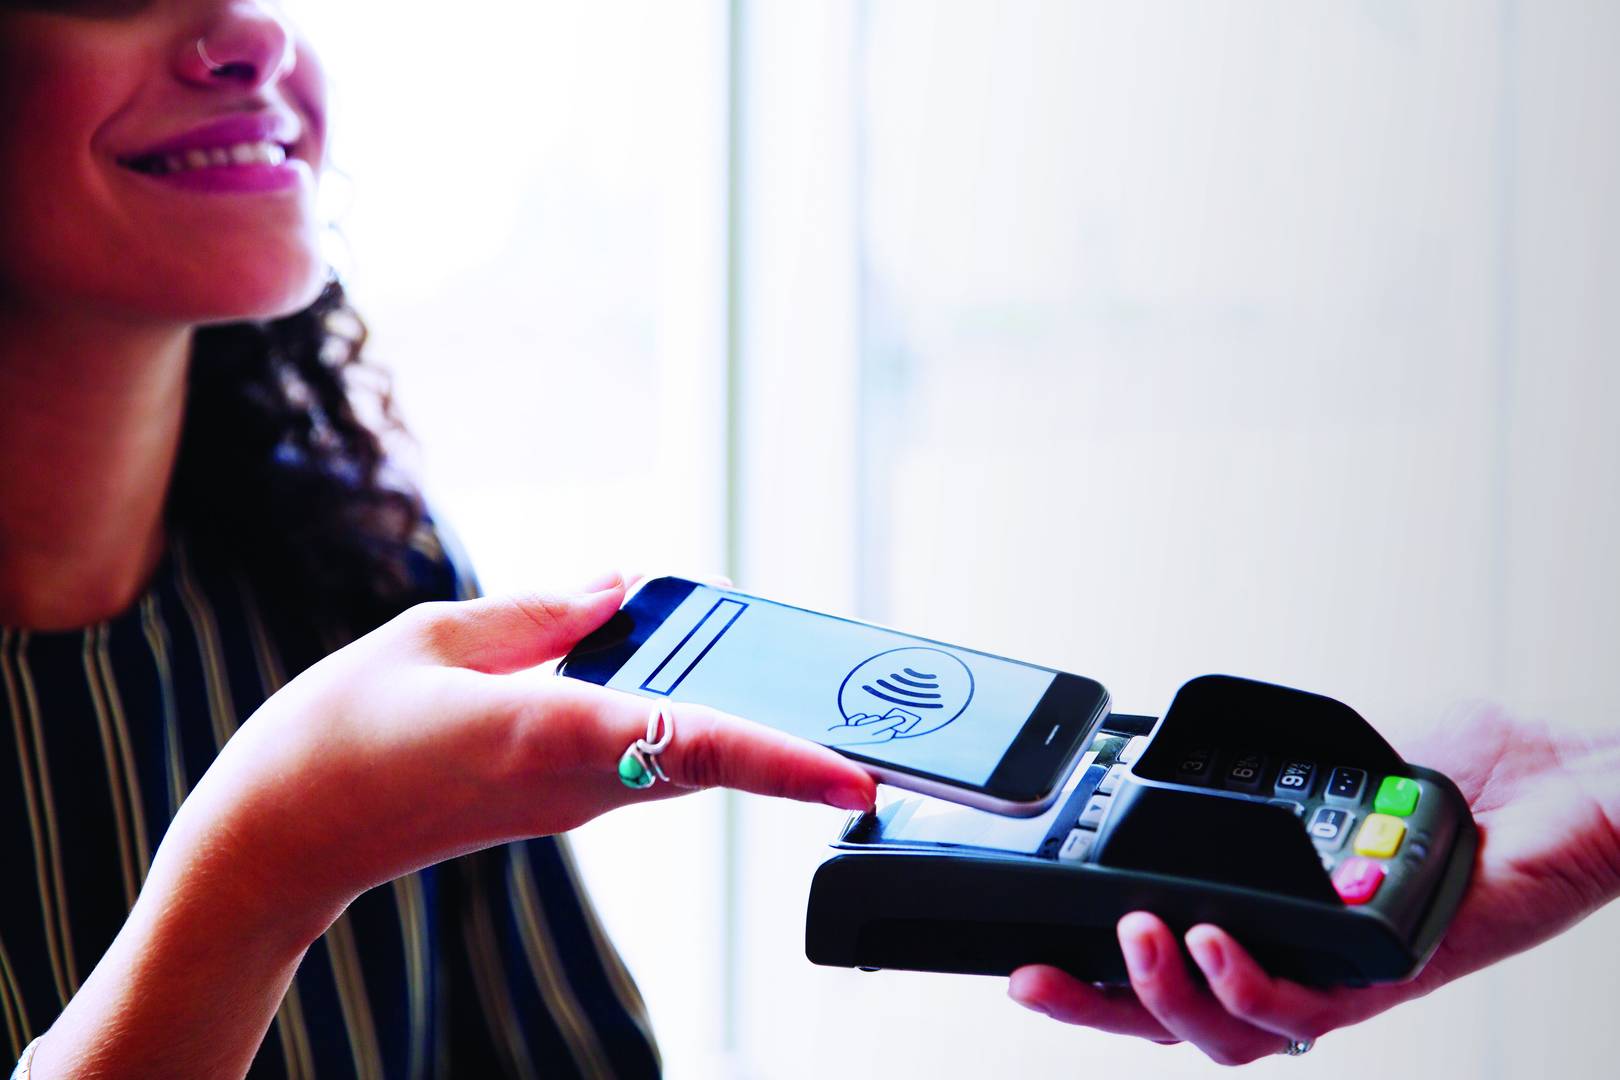 Contactless payment card reader